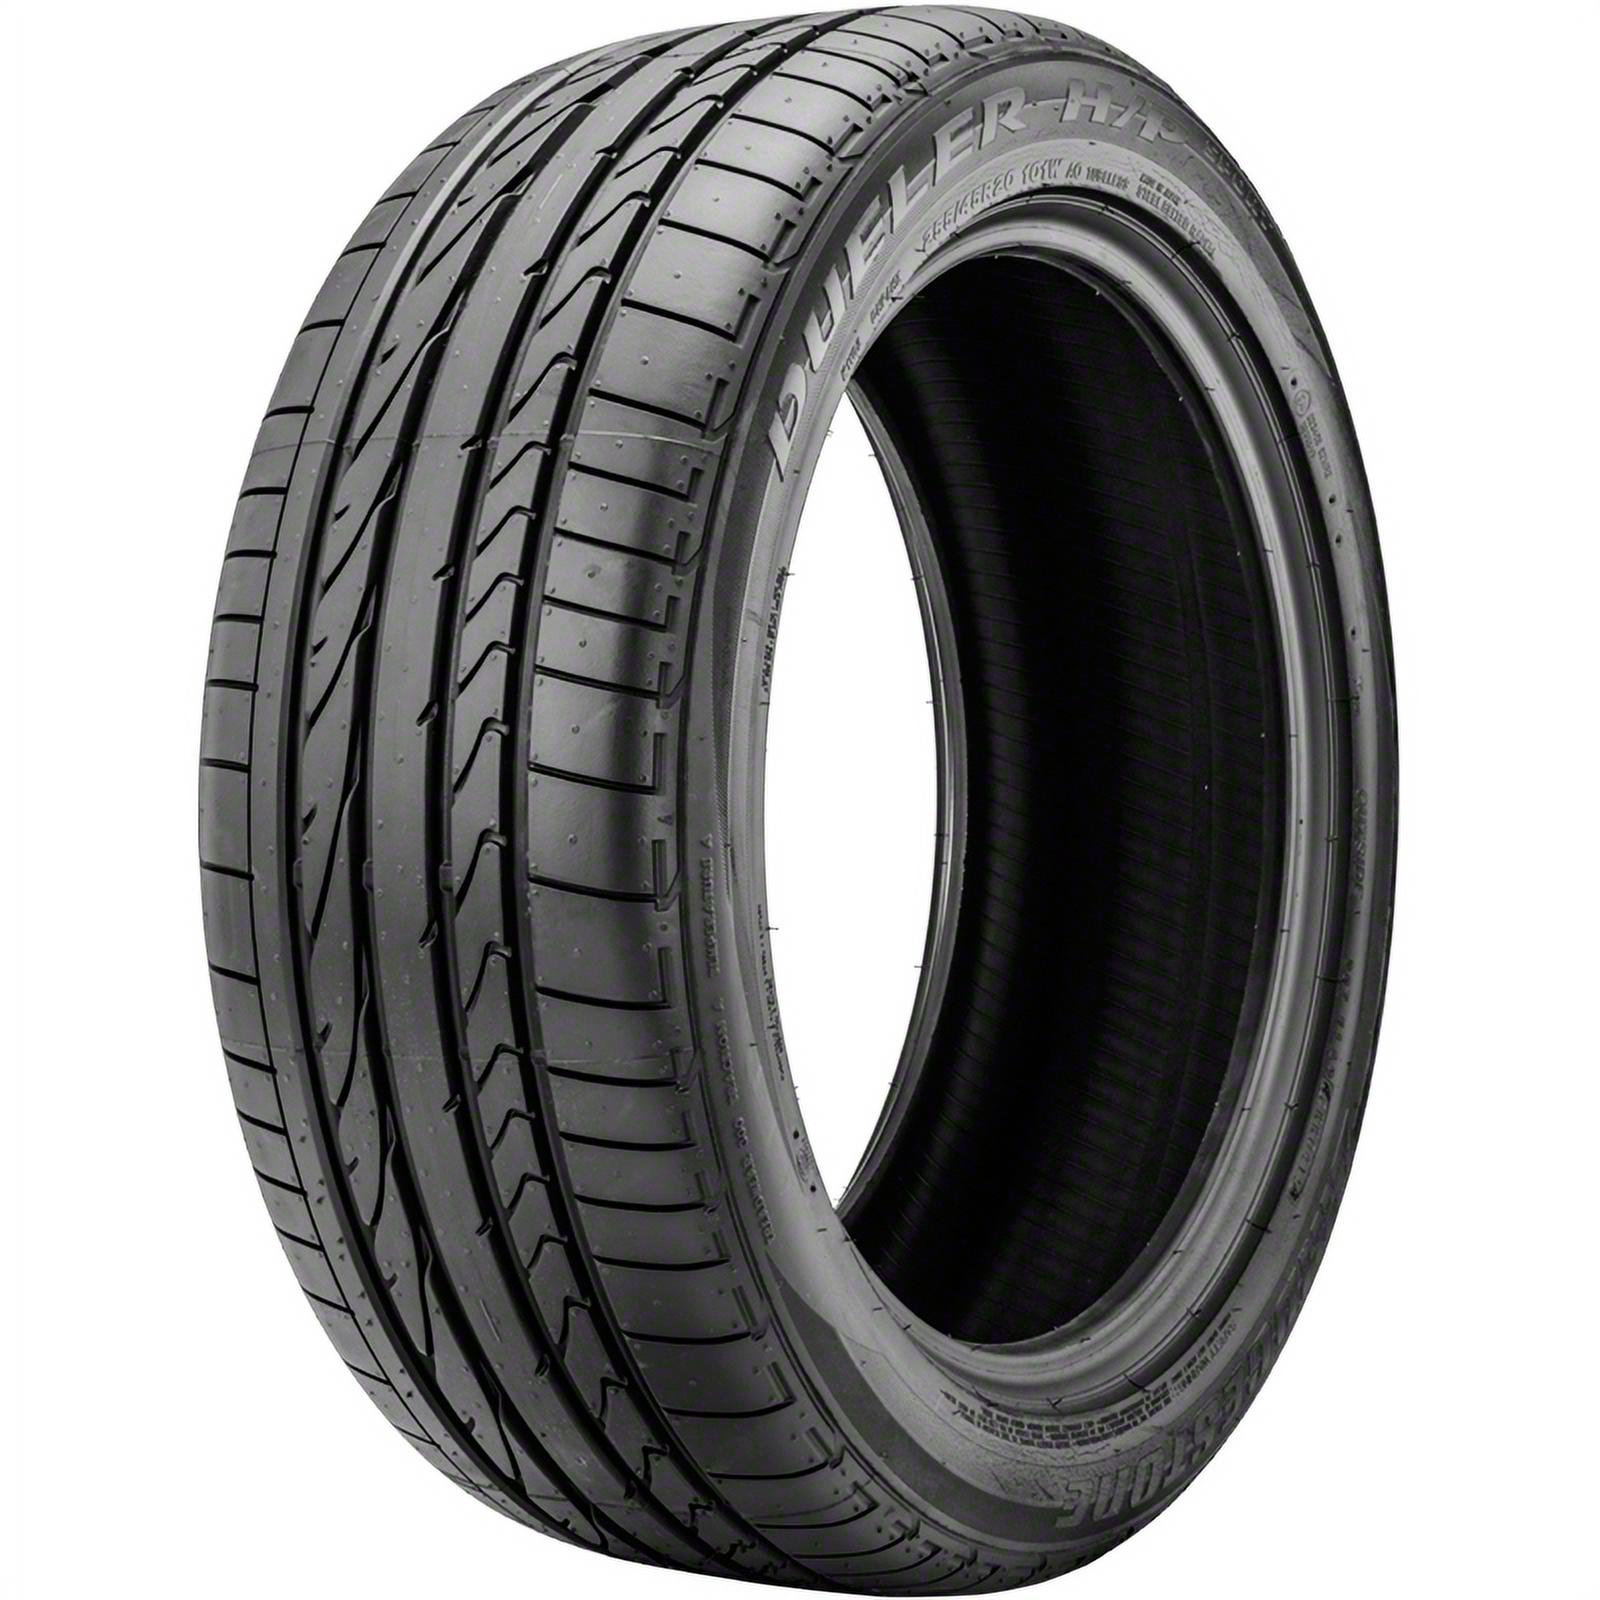 Bridgestone Dueler H/P Sport AS 245/60R18 105 V Tire - image 1 of 3